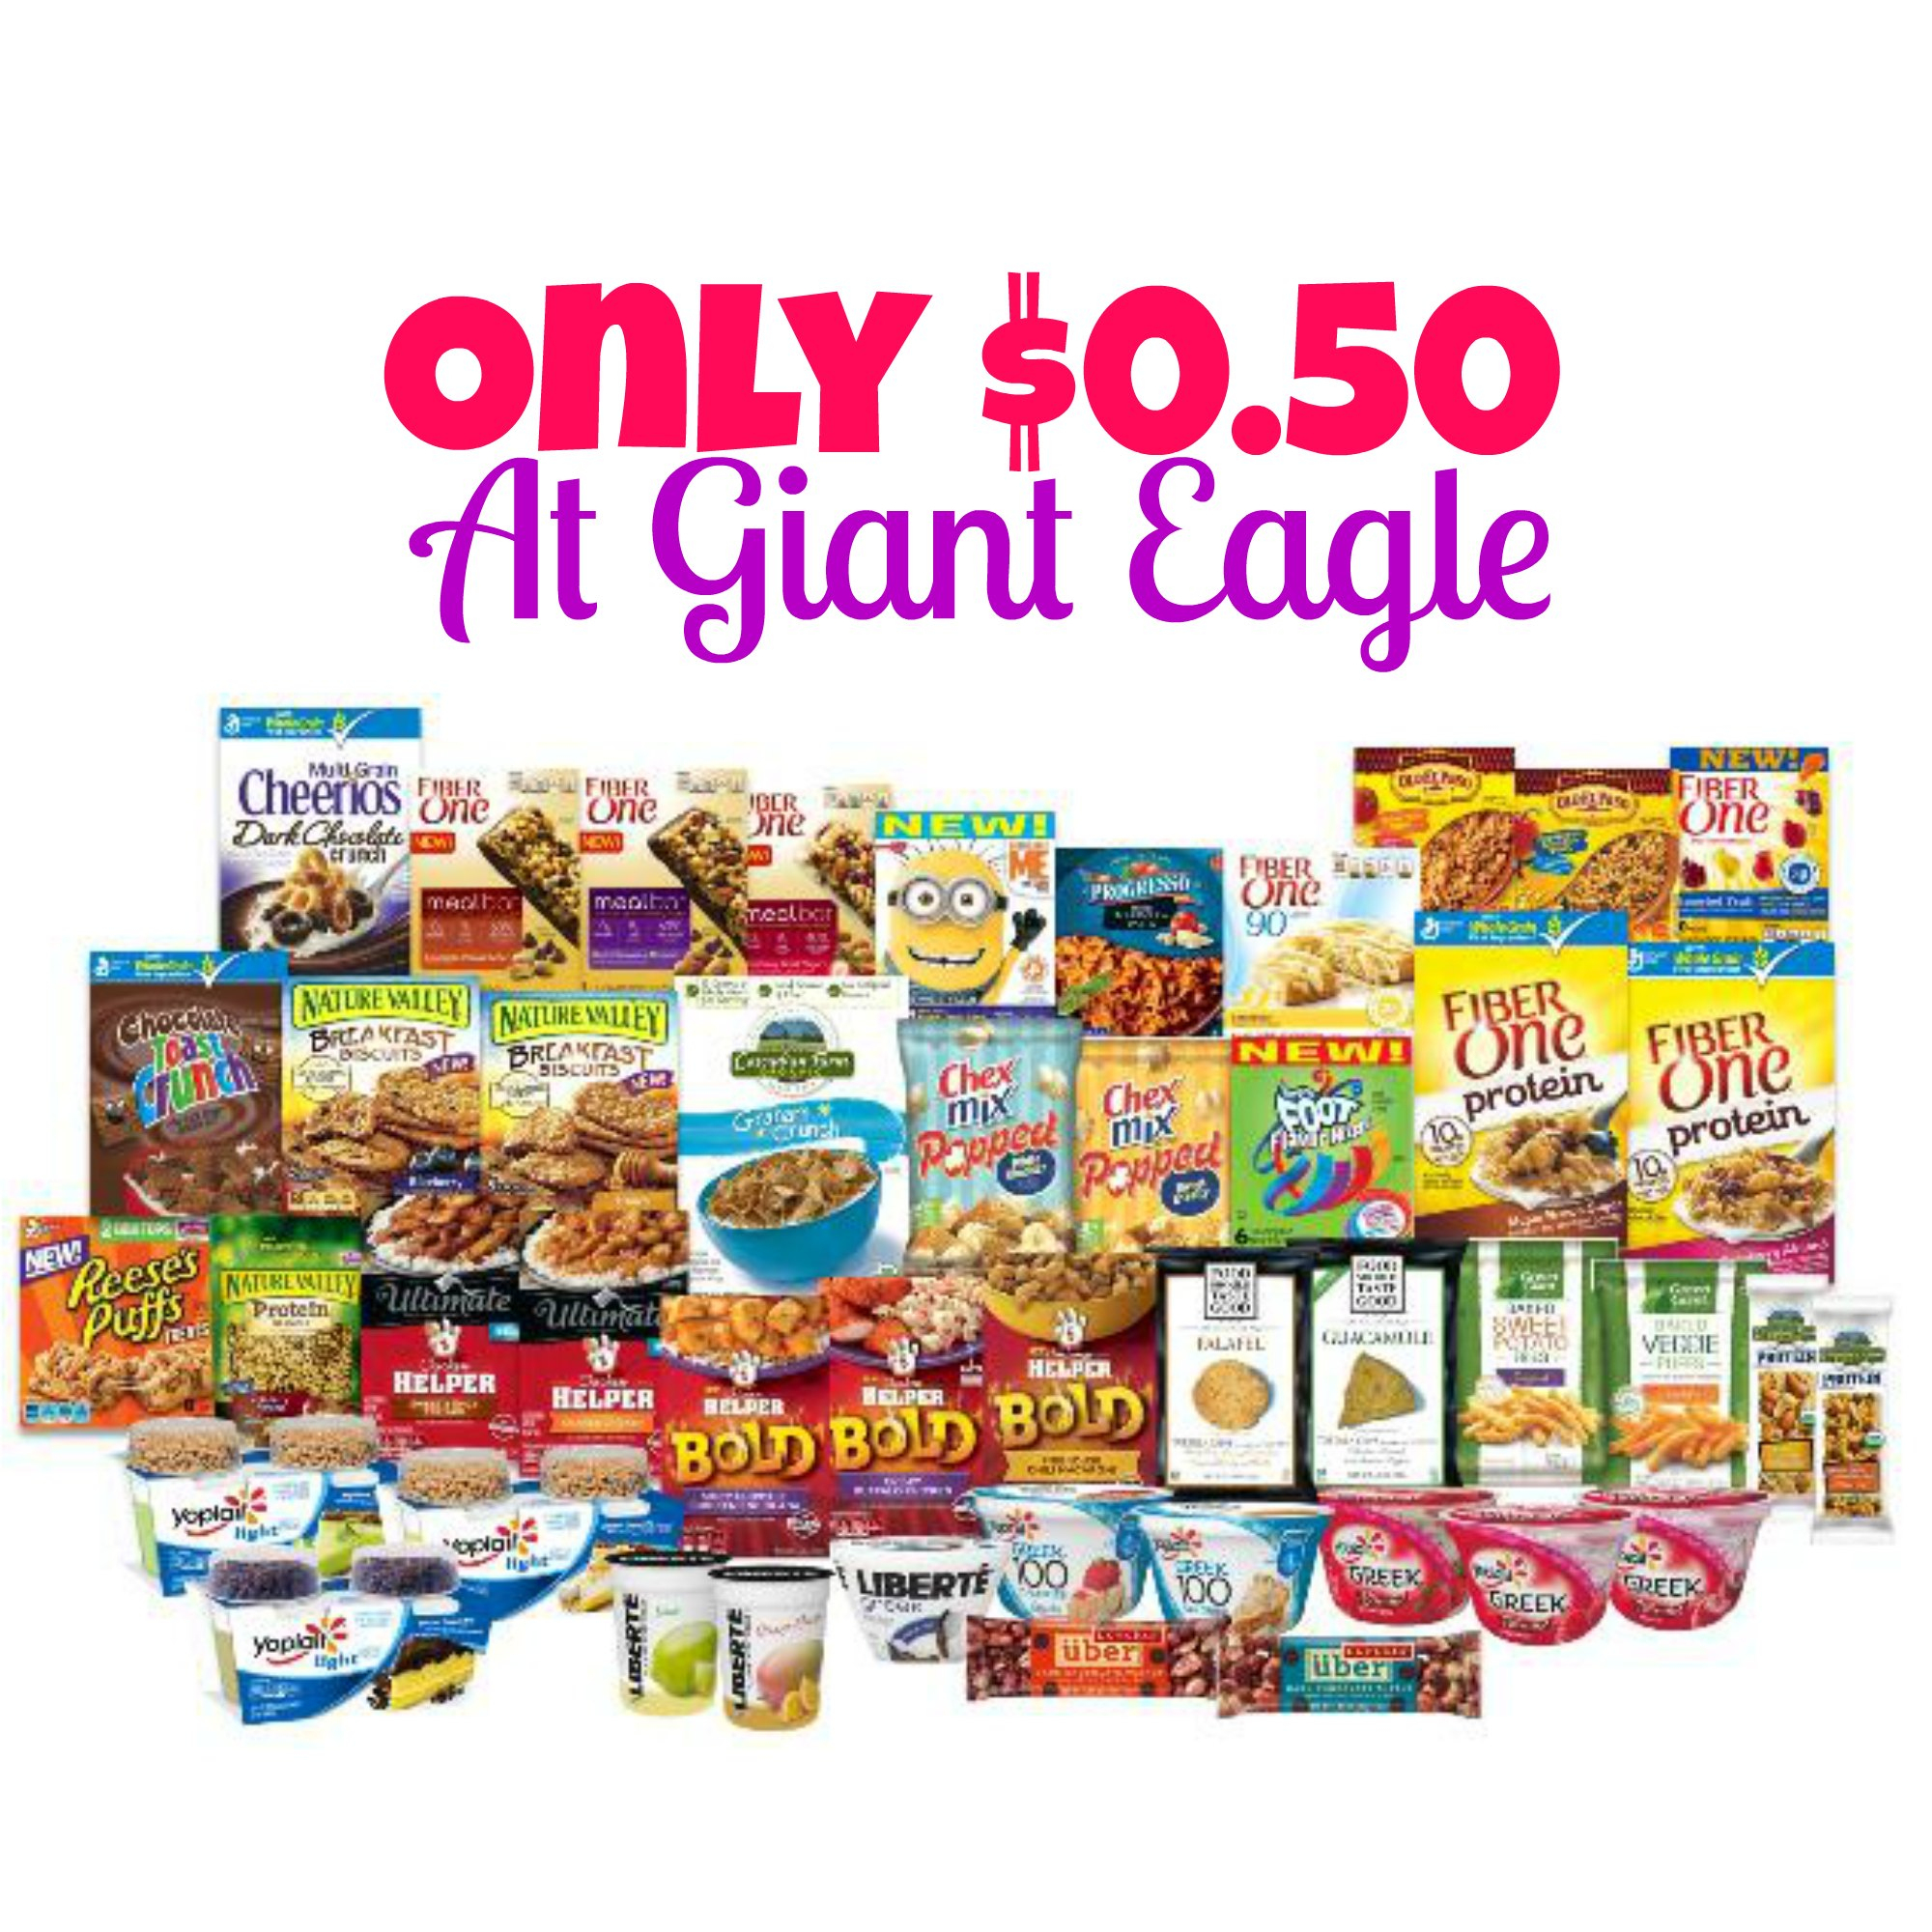 Giant Eagle | Mojosavings | Page 2 - Free Printable Giant Eagle Coupons